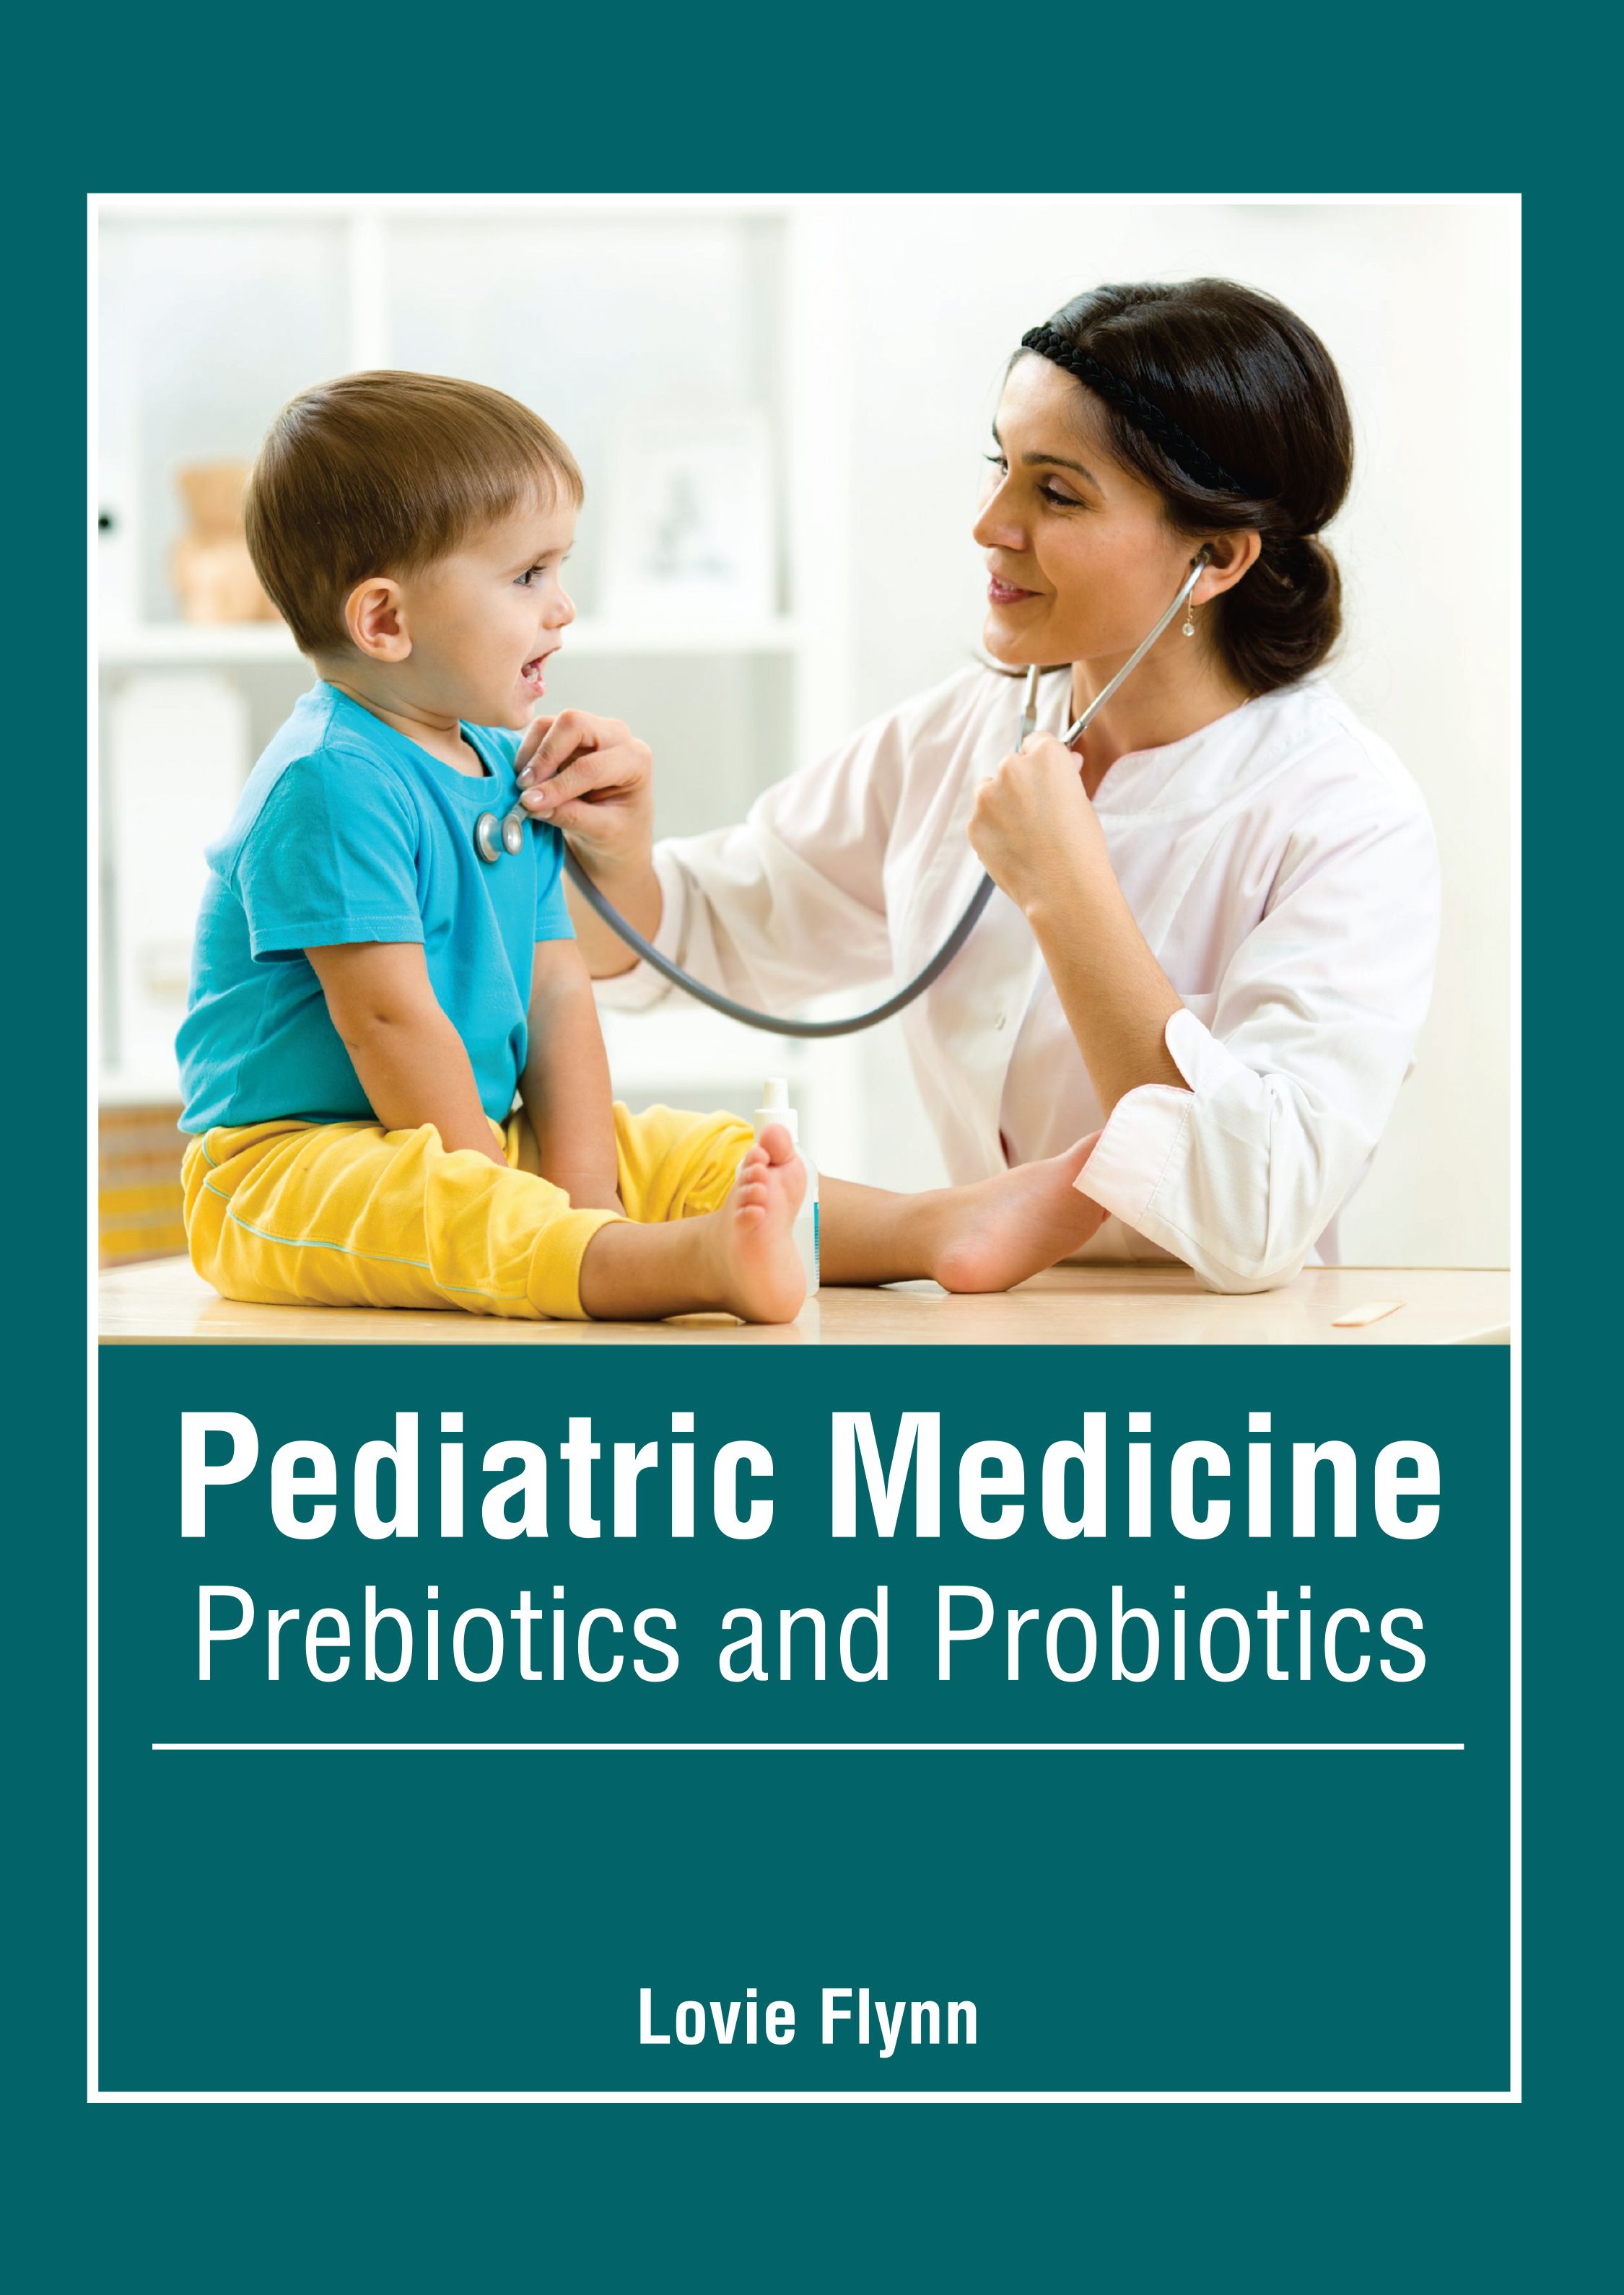 

medical-reference-books/microbiology/pediatric-pulmonology-9798887403687